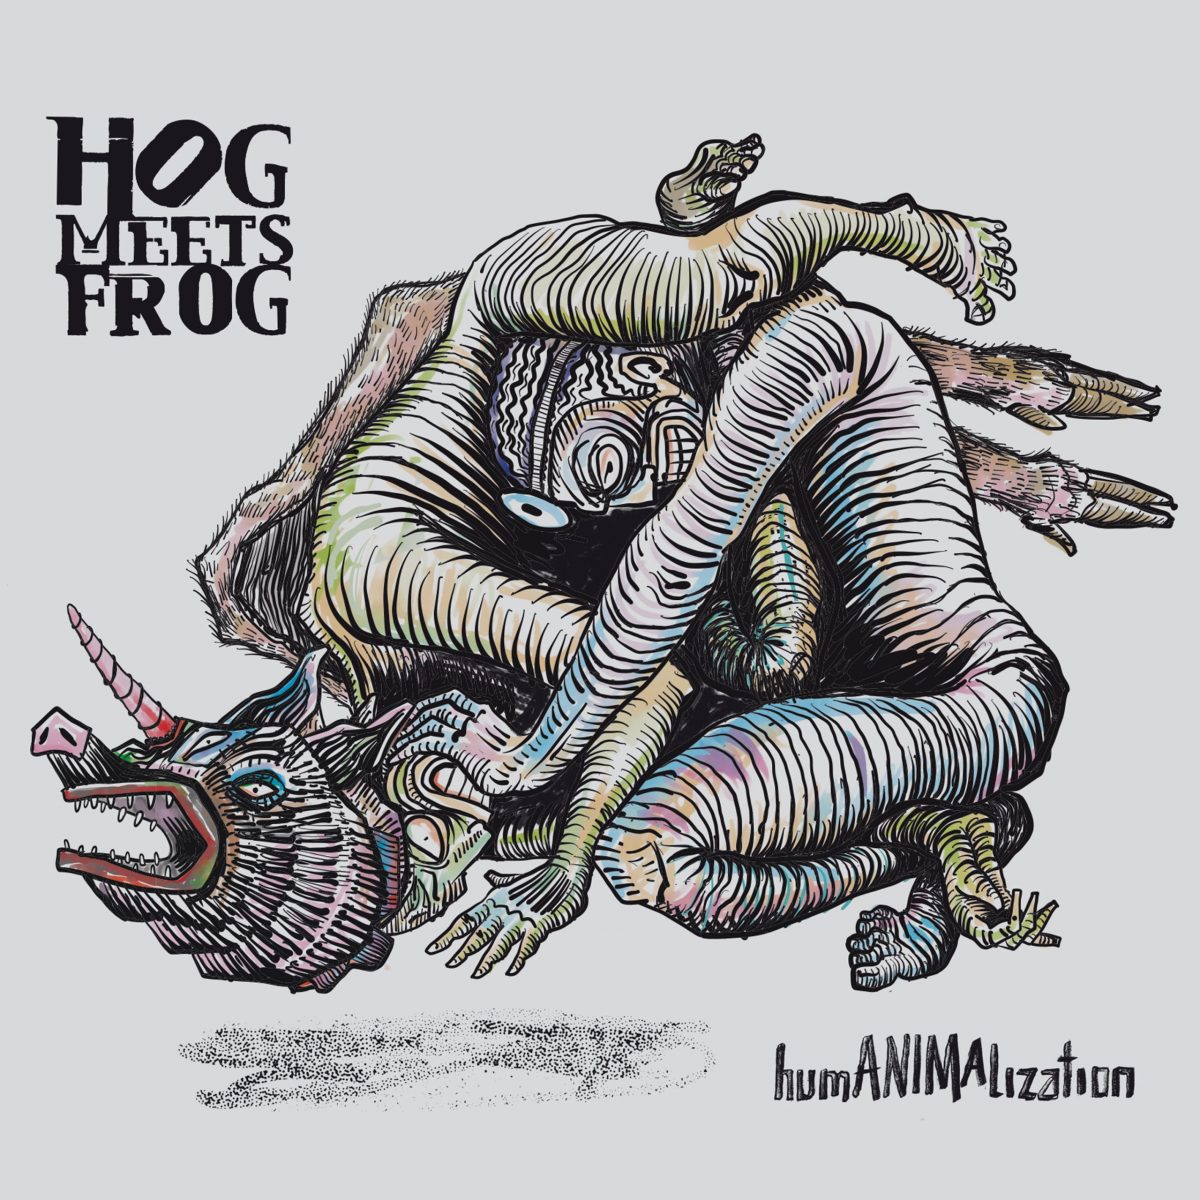 hog-meets-frog-humanimalization-die-xxl-reportage